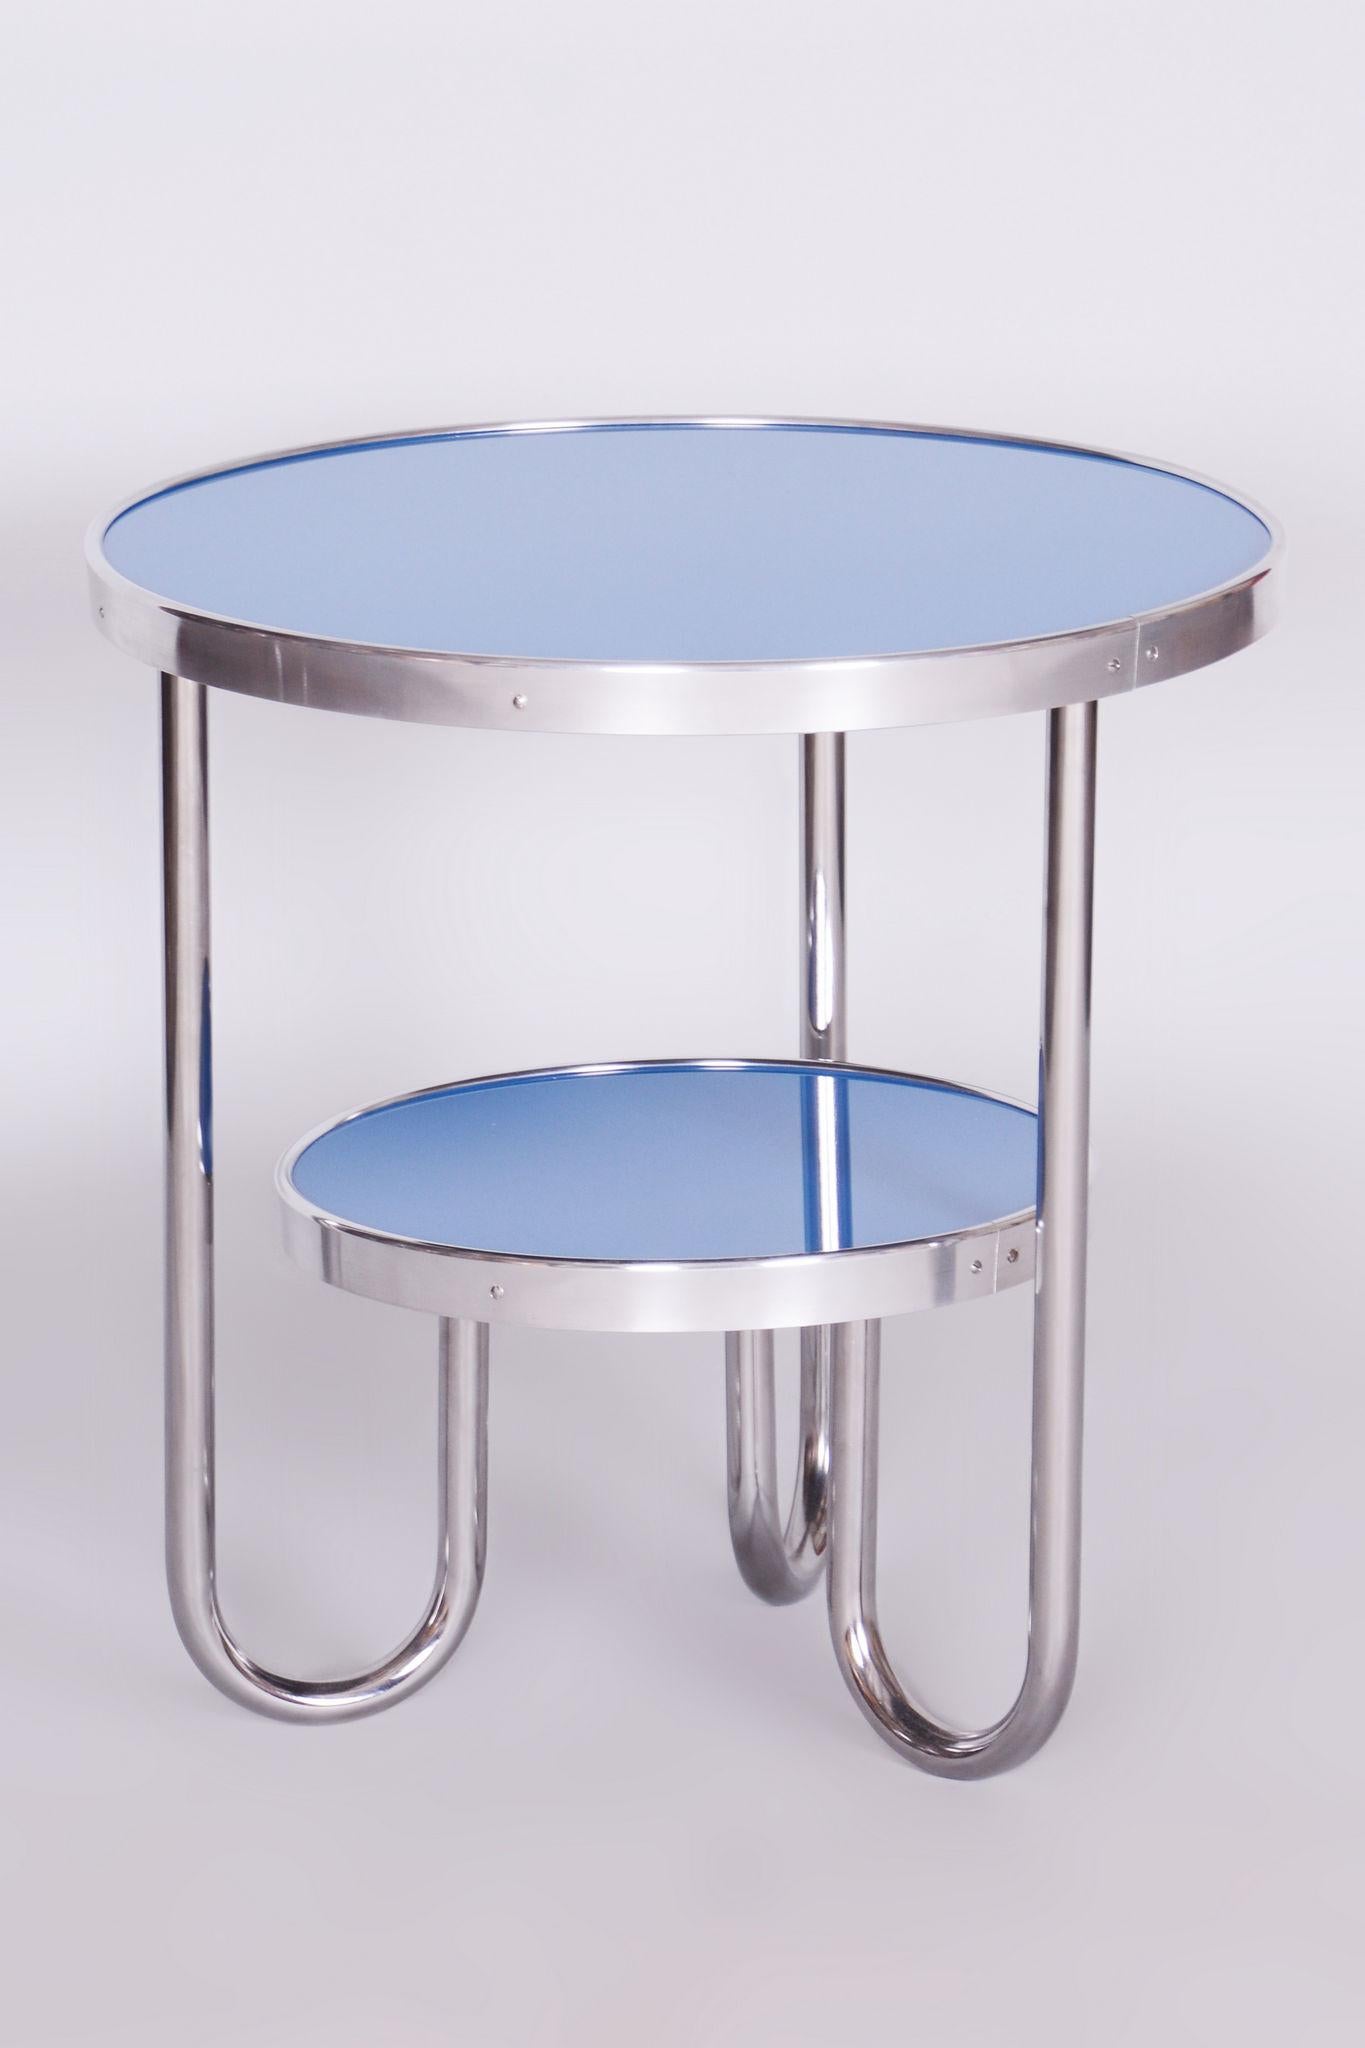 Restored Bauhaus Small Blue Table, Kovona, Chrome, Czechia, 1930s For Sale 6